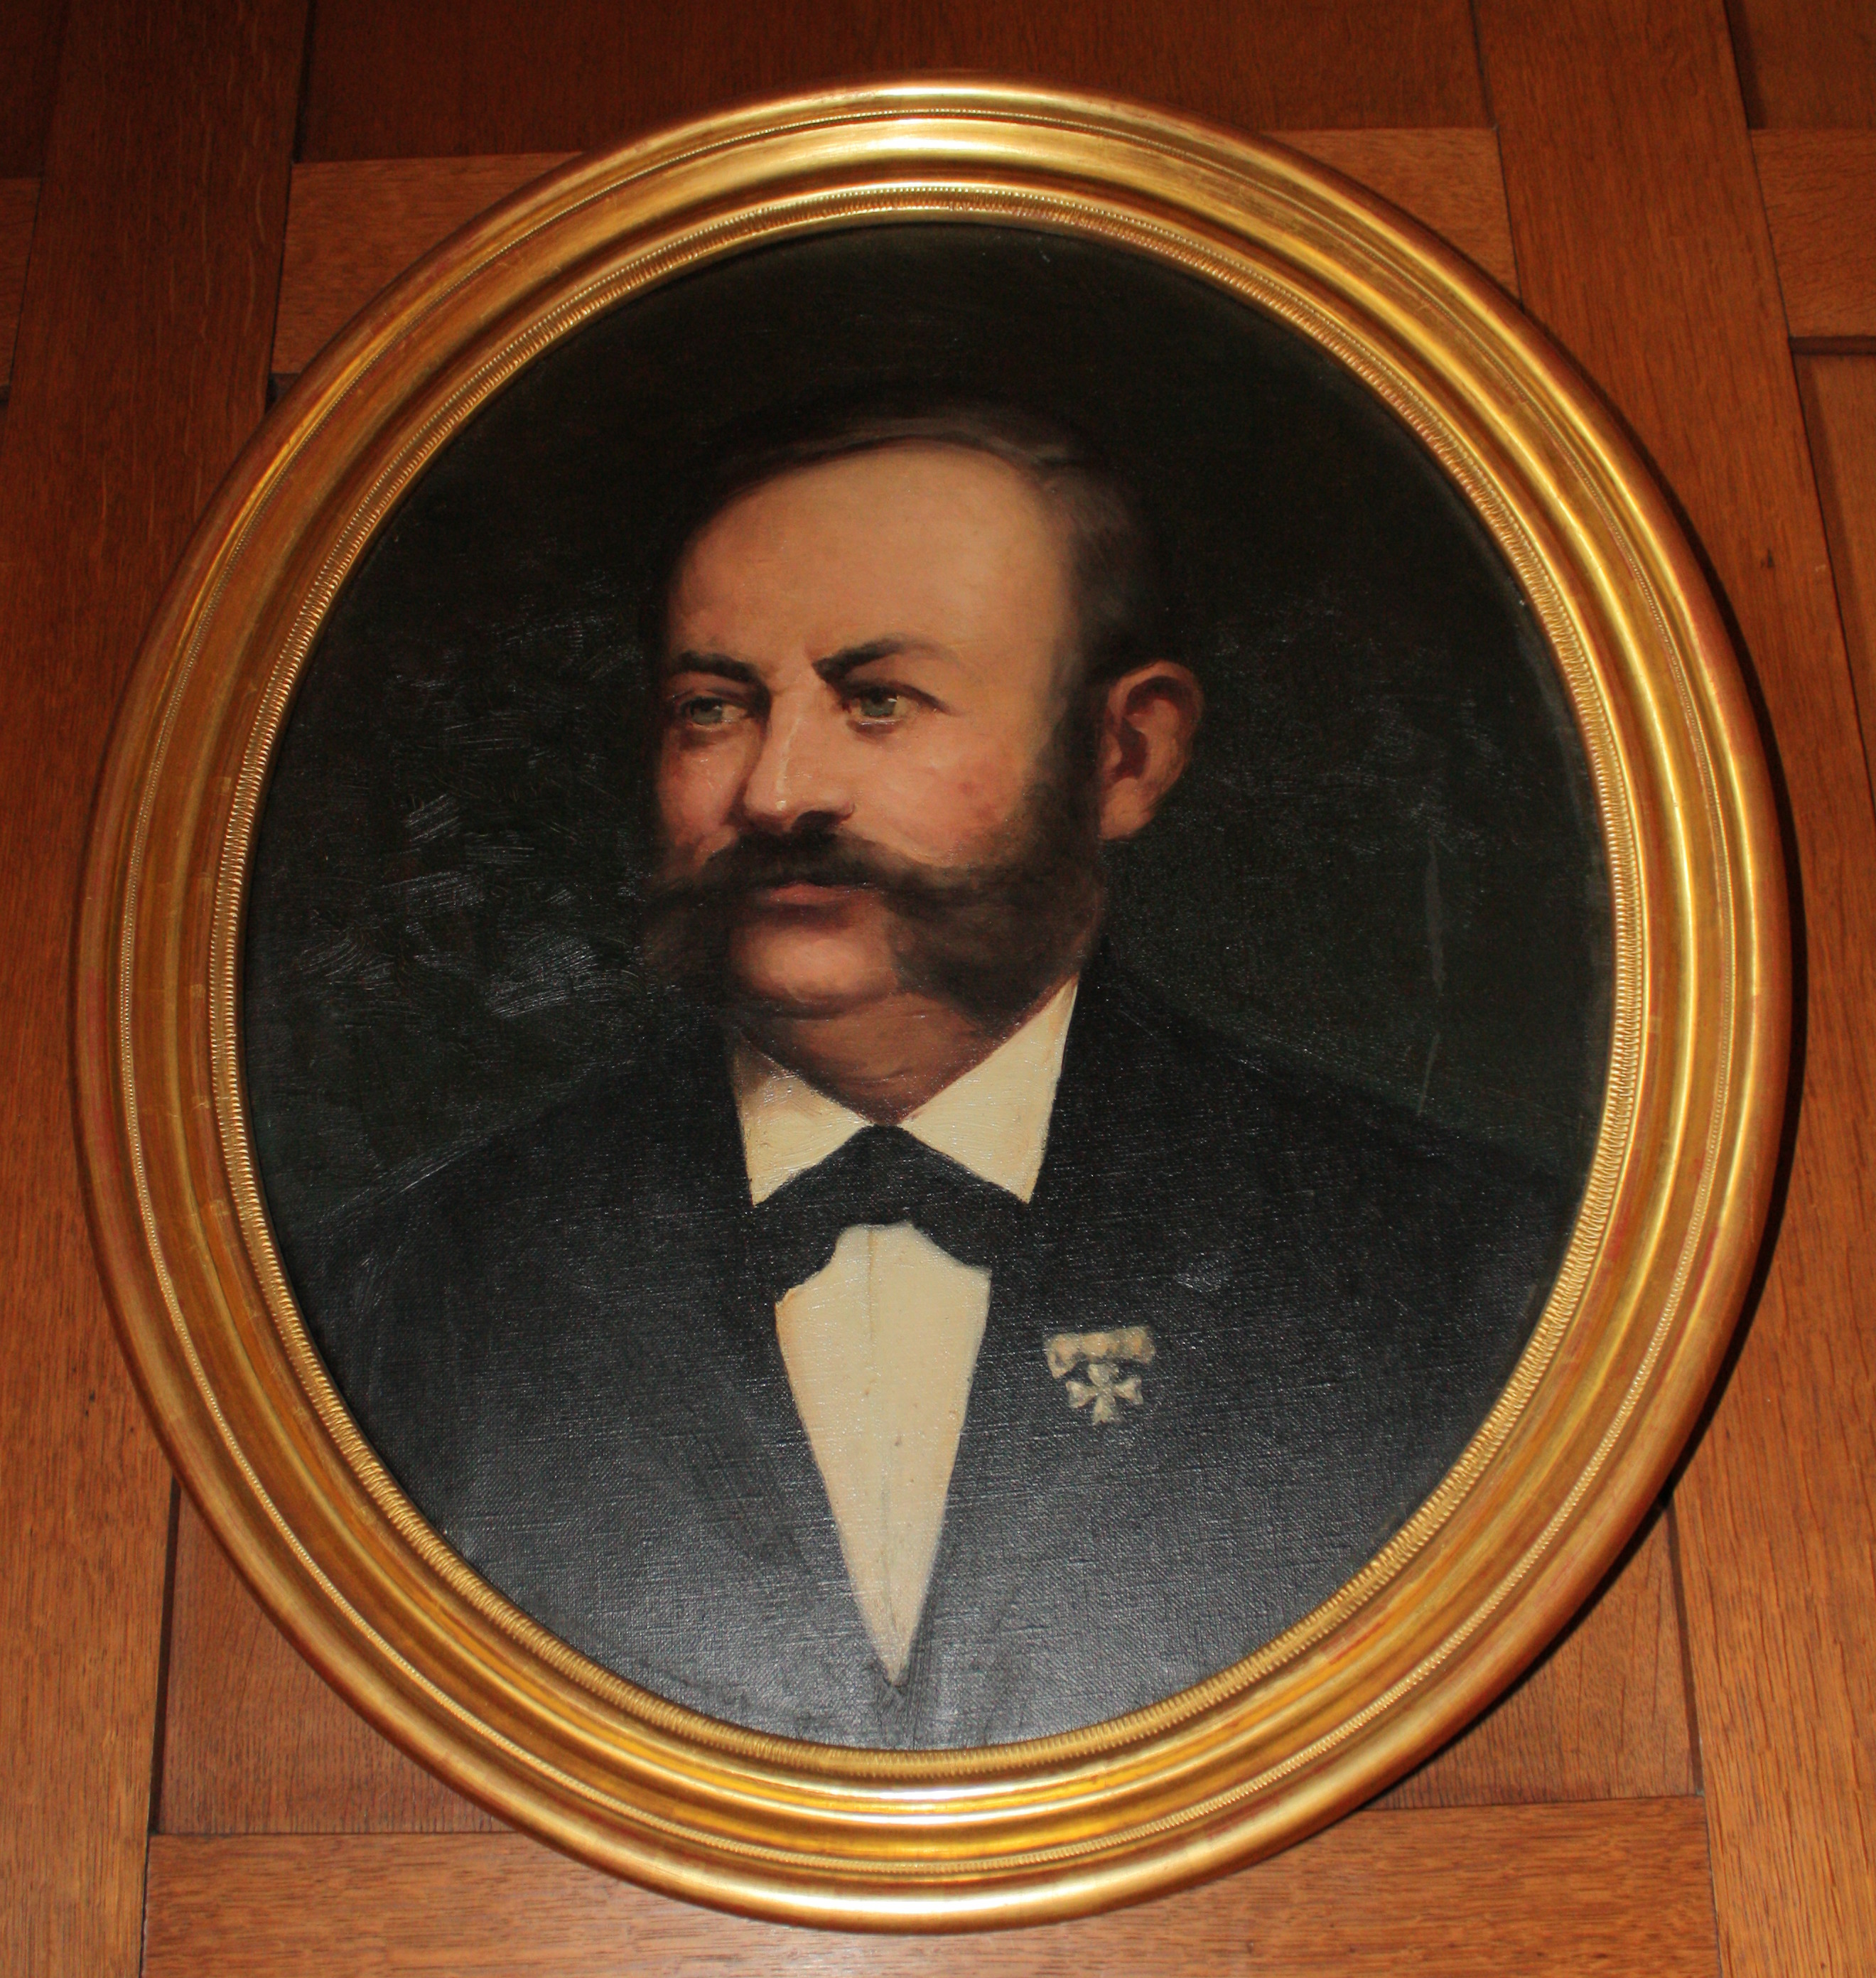  Gemeindevorsteher Adolf Feurig (1874-1890)